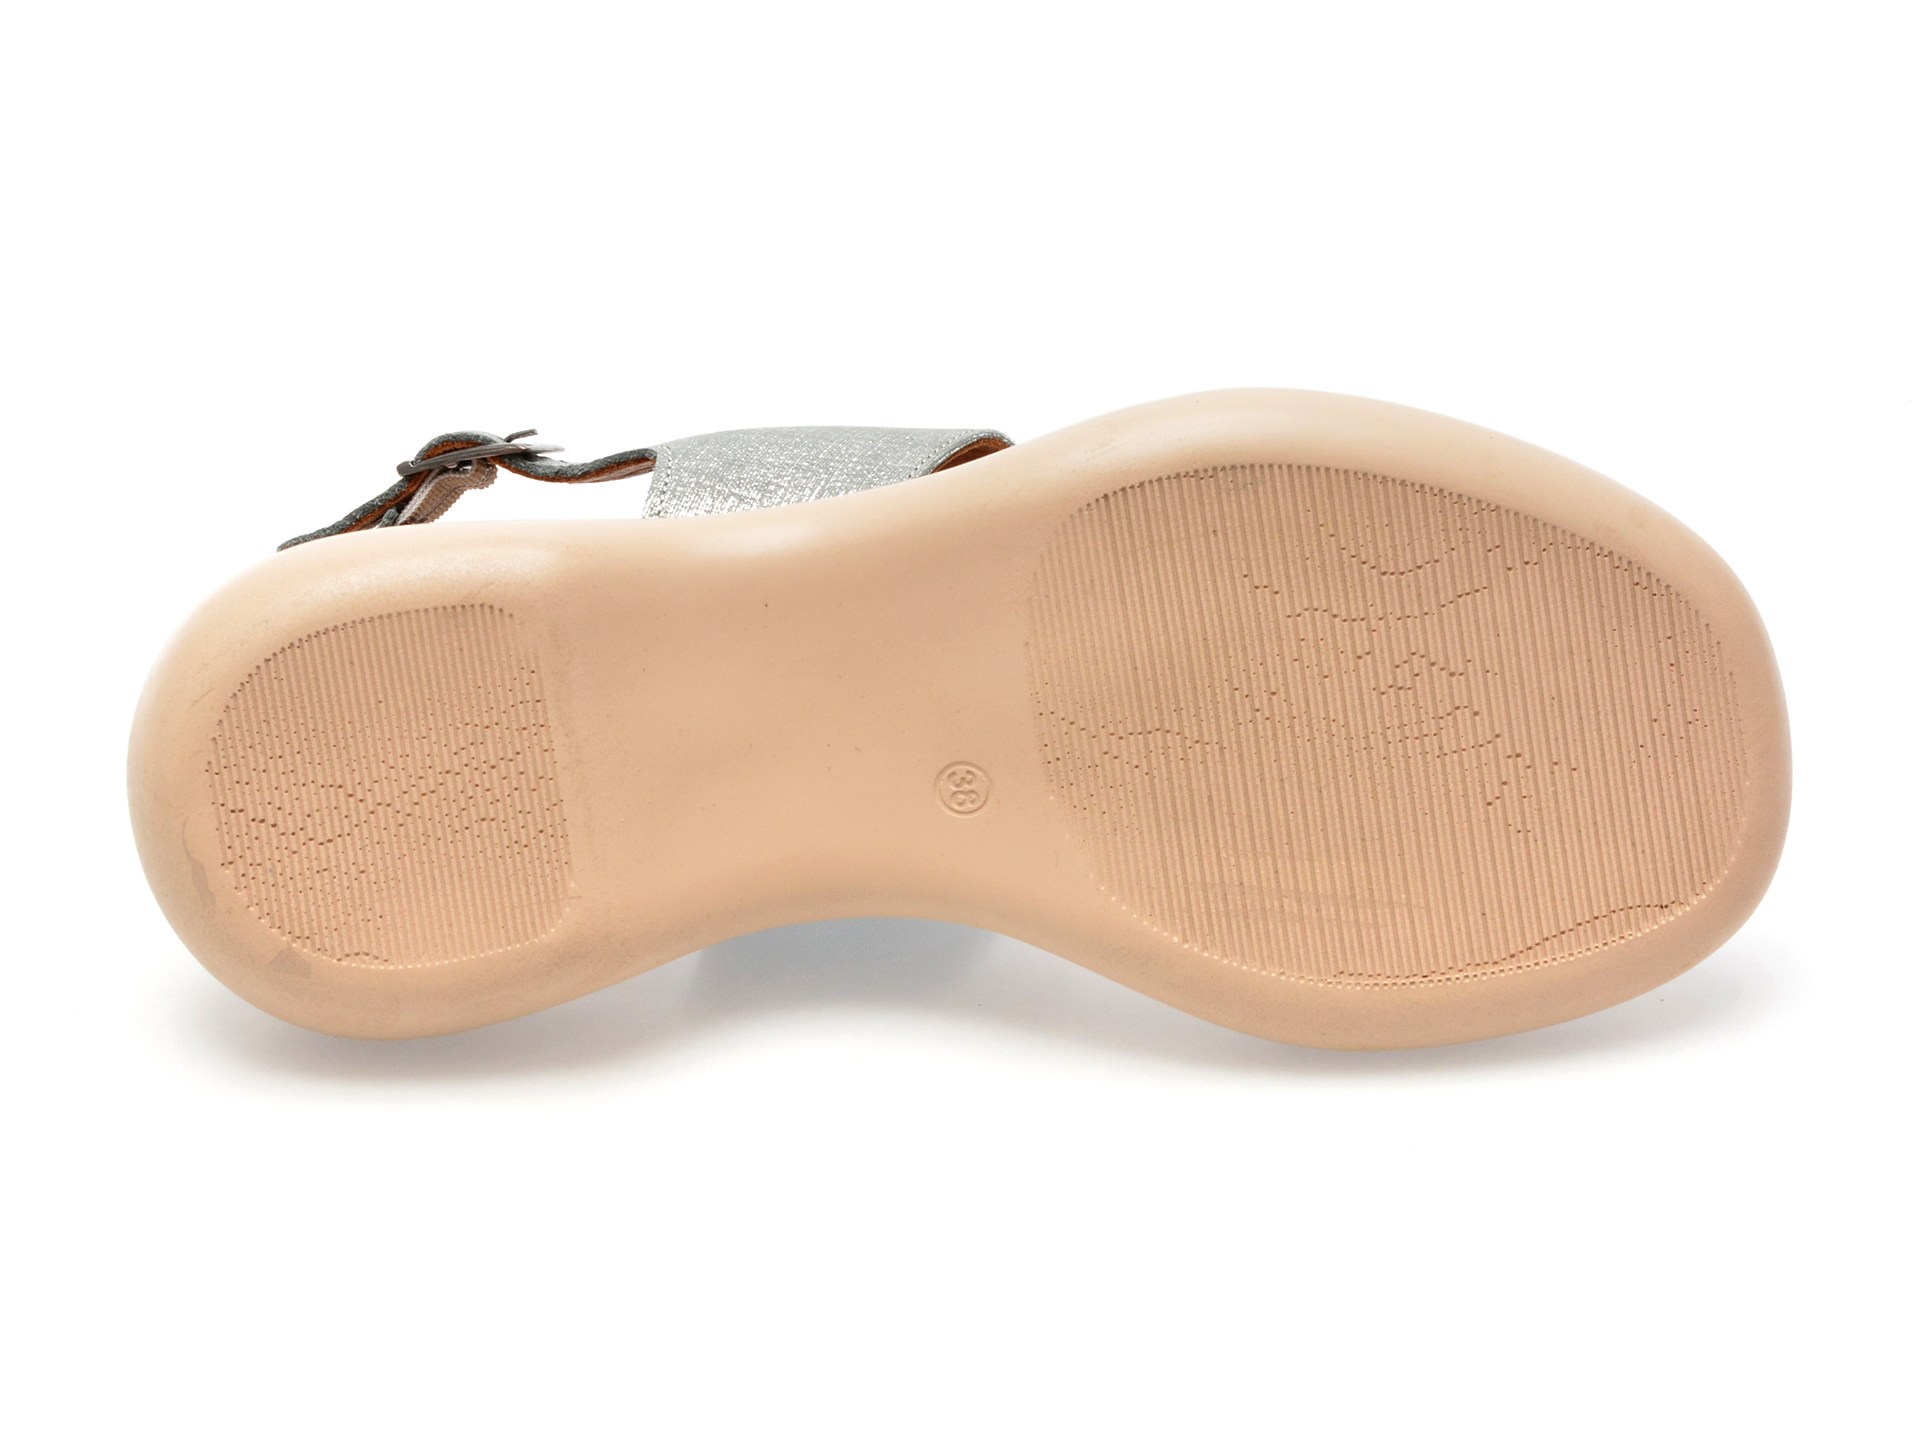 Sandale MAGRIT gri, 101, din piele naturala lacuita